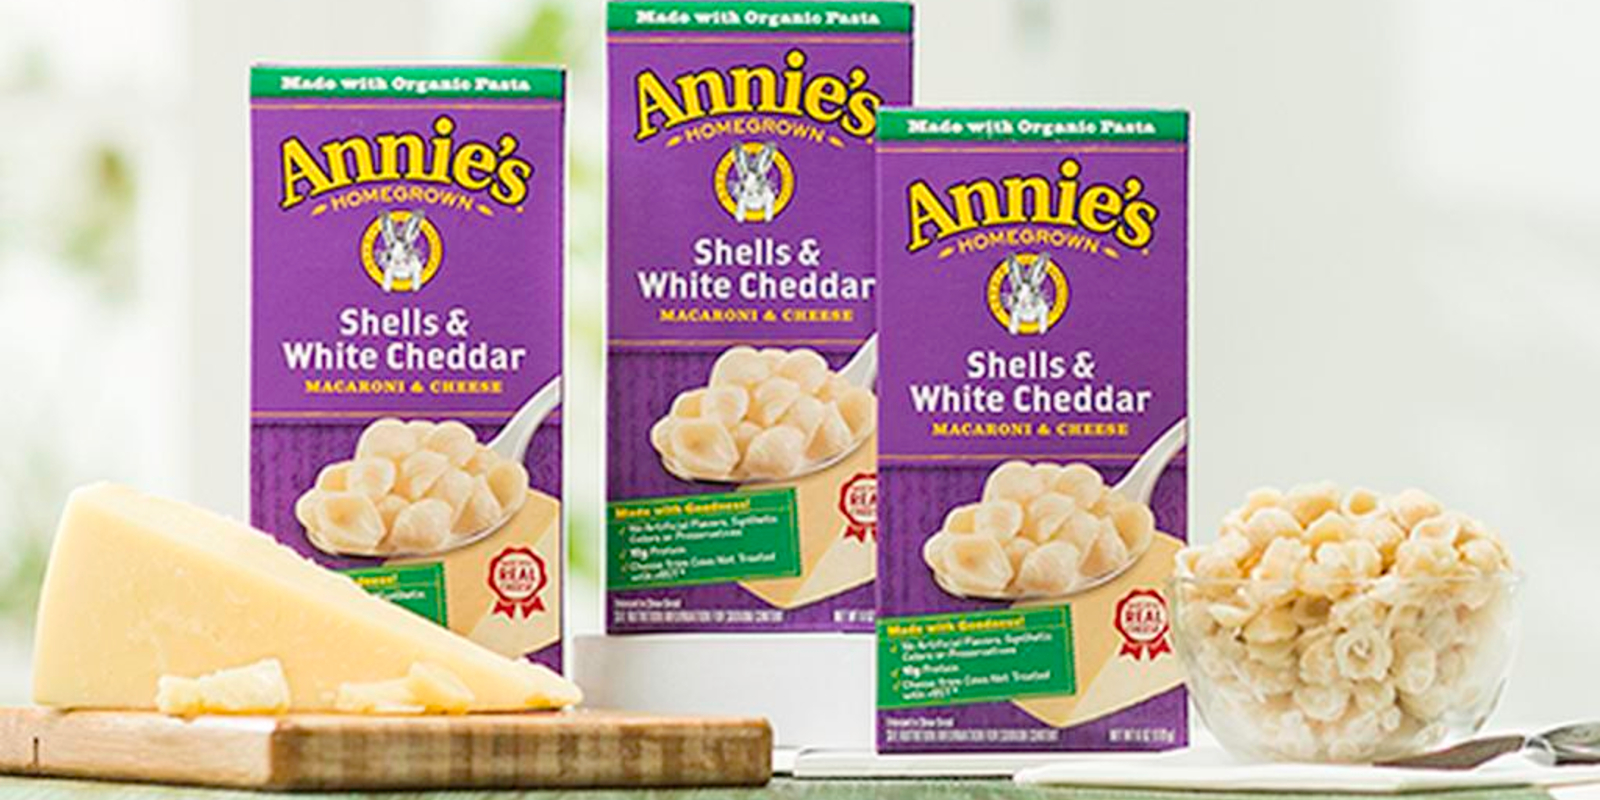 Annie's: Growing Organically